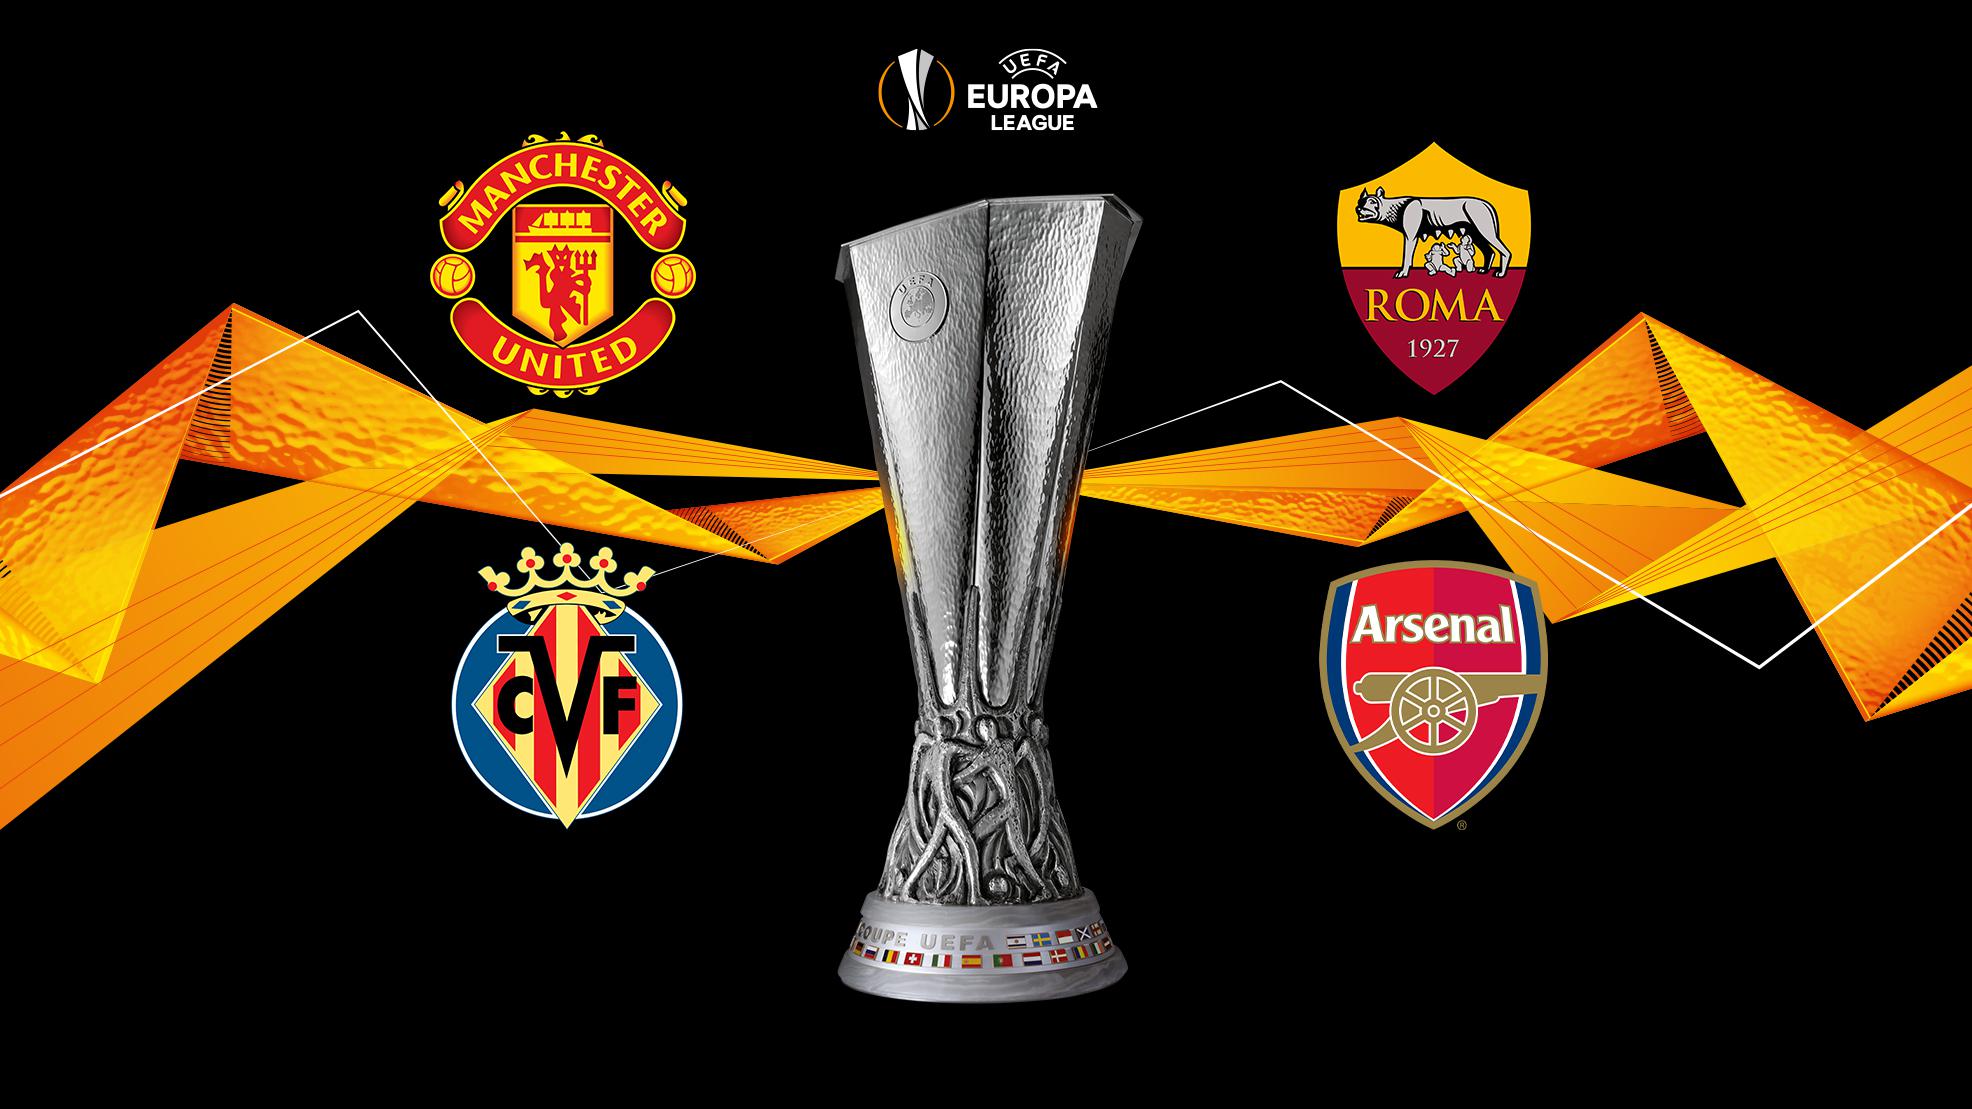 Europa League Finale 2021 Uefa Europa League 2021 Semi Finals The Final Four Sabguru News English